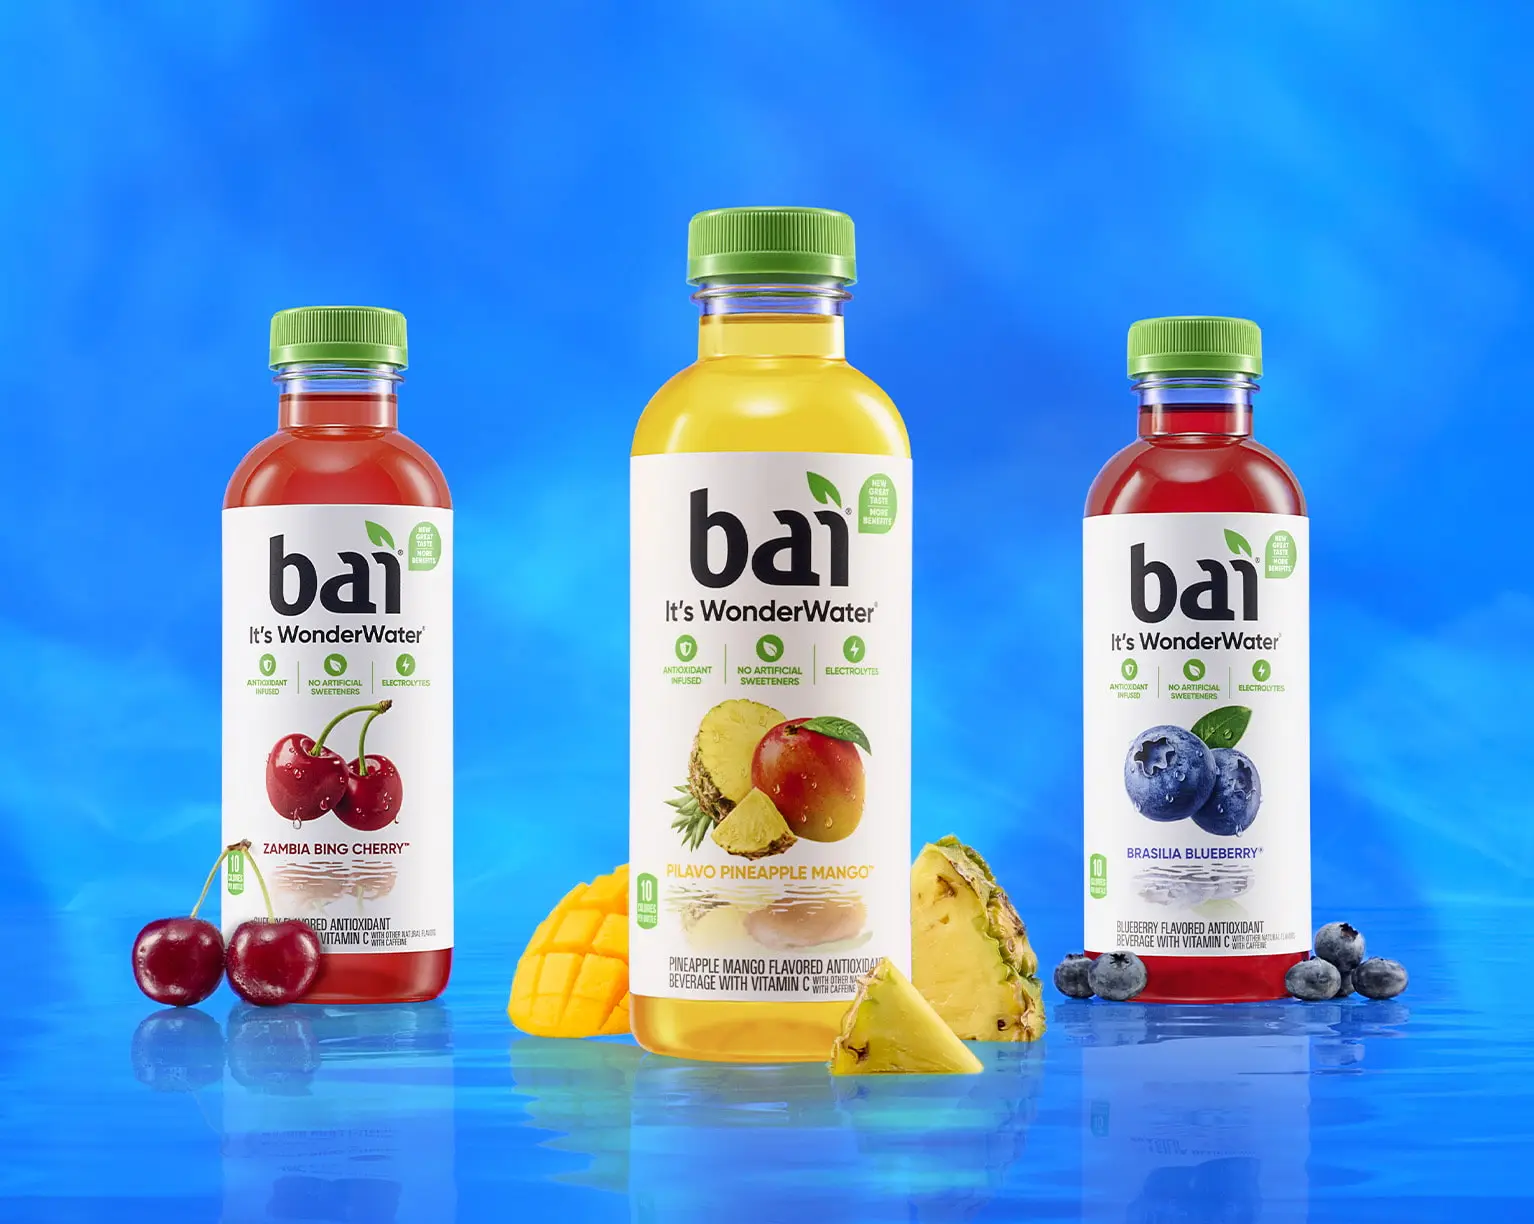 Bai Bottles next to fruit showcasing their respective flavors